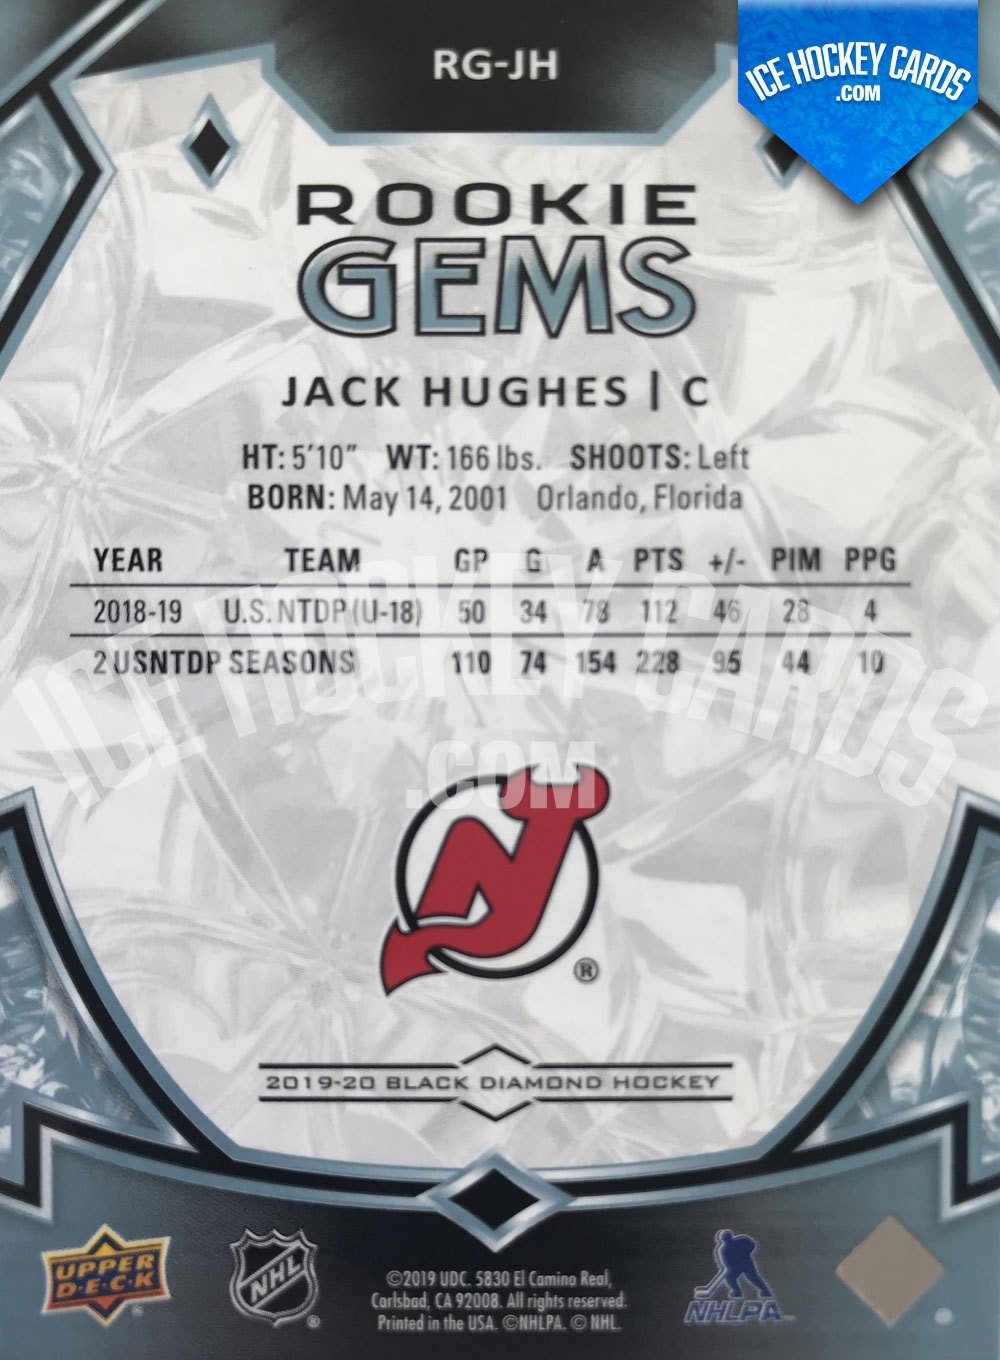 Upper Deck - Black Diamond 19-20 - Jack Hughes Rookie Gems back